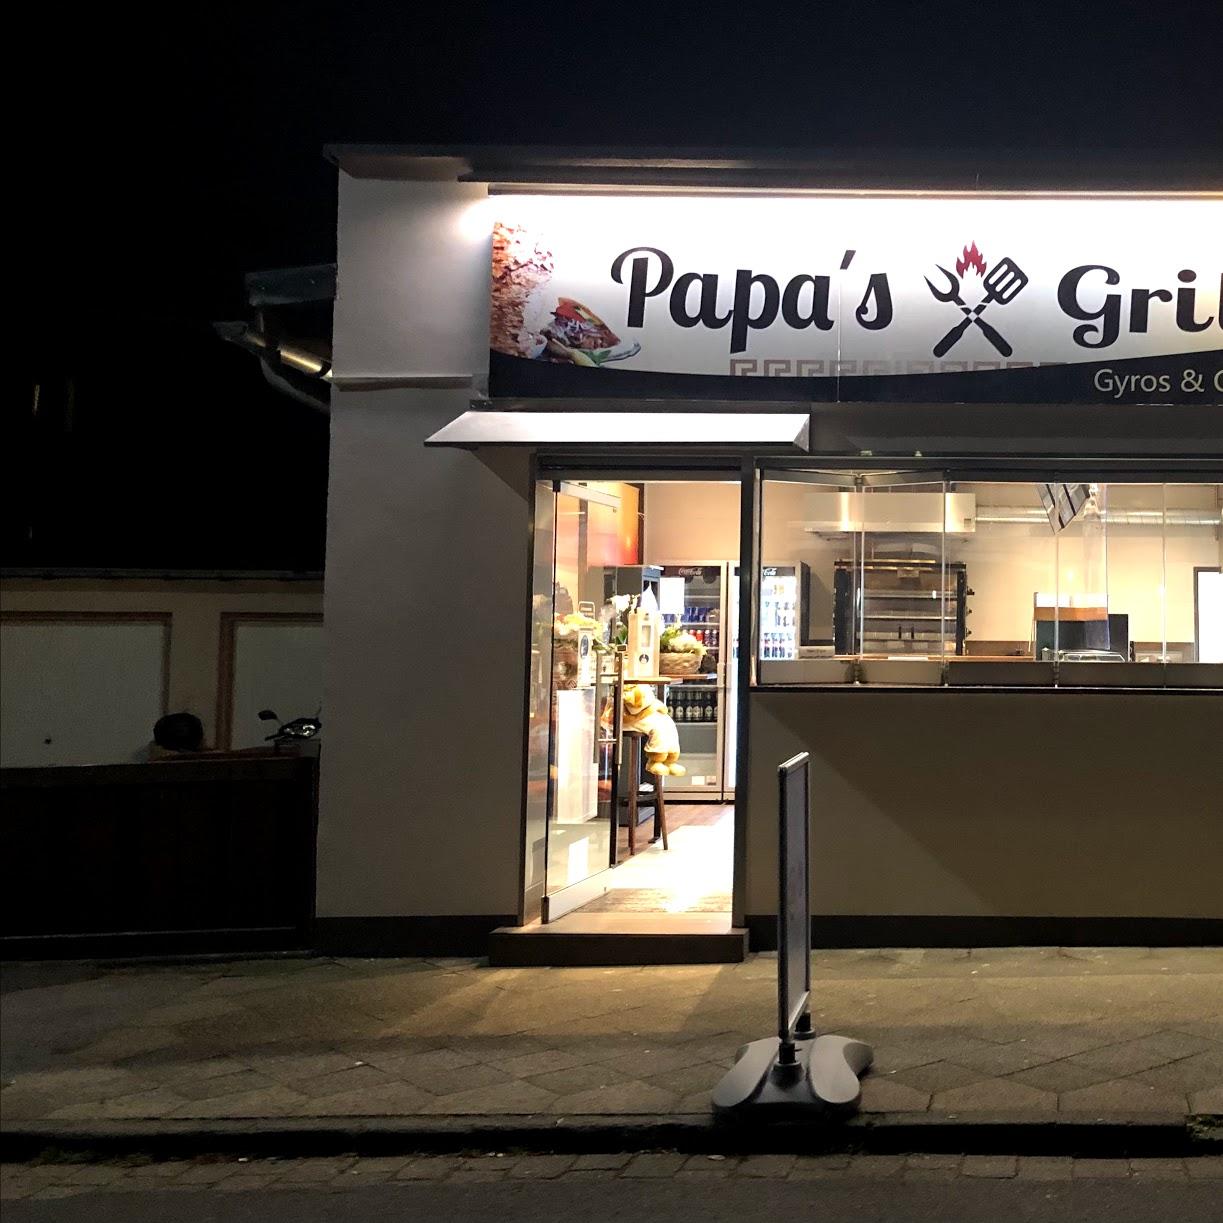 Restaurant "Papa